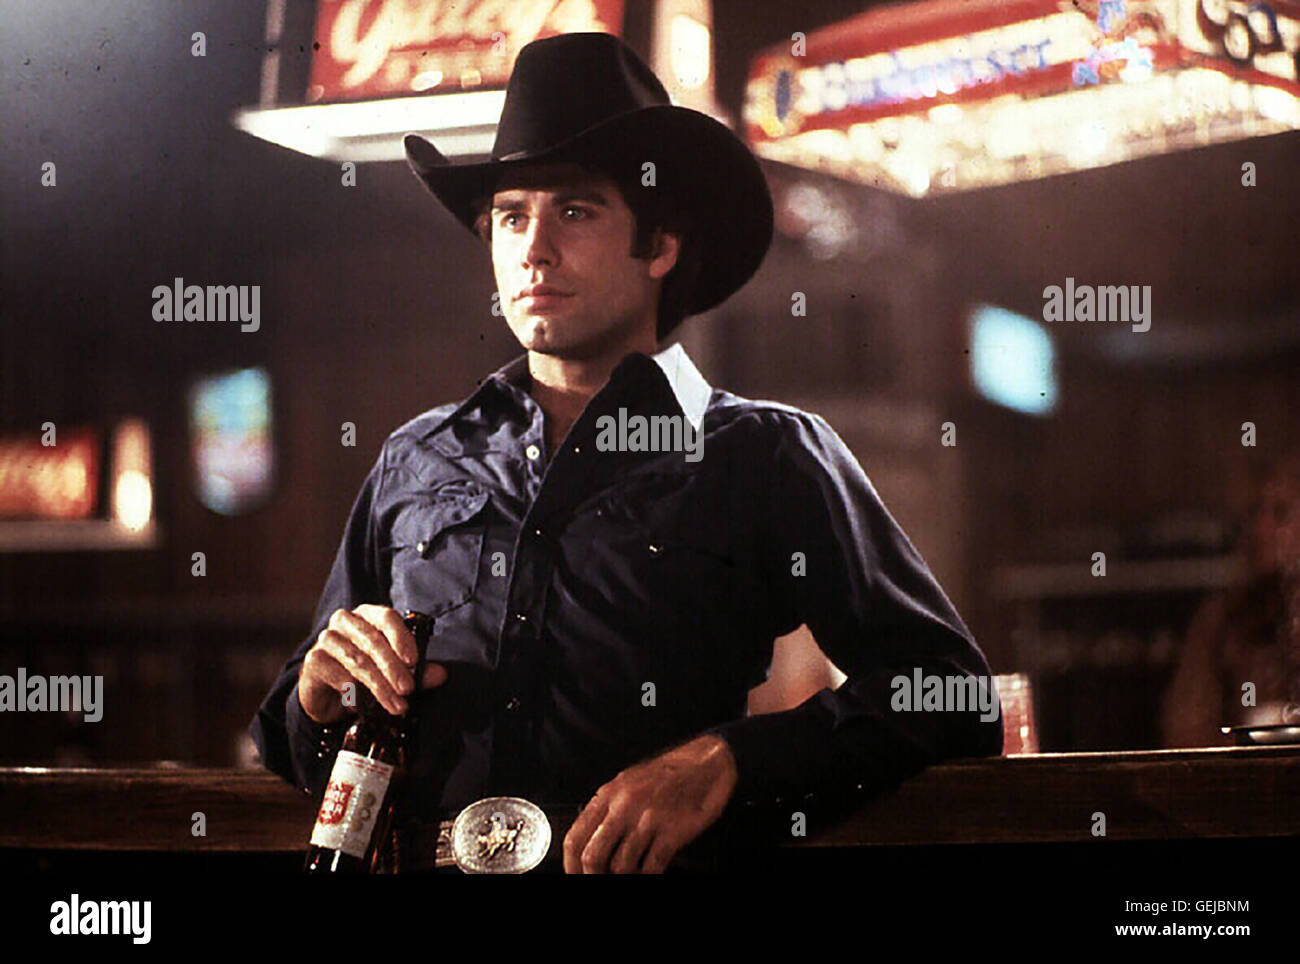 John Travolta Bud (John Travolta) ist Cowboy aus Ueberzeugung. *** Local Caption *** 1980, Urban Cowboy, Urban Cowboy Stock Photo